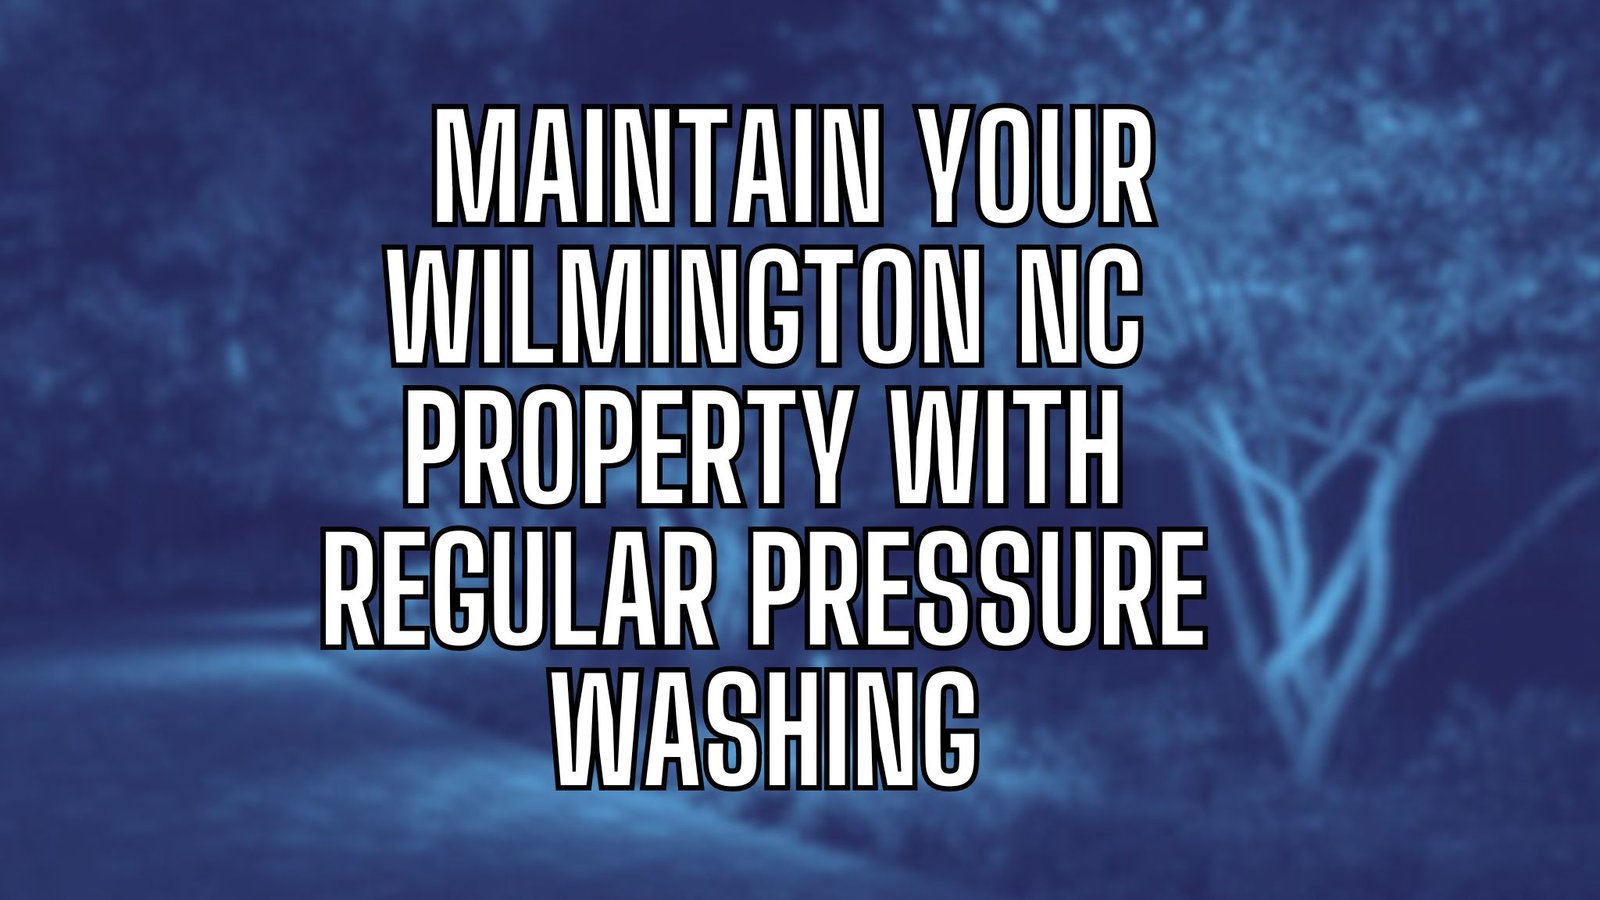 regulare pressure washing wilmington nc